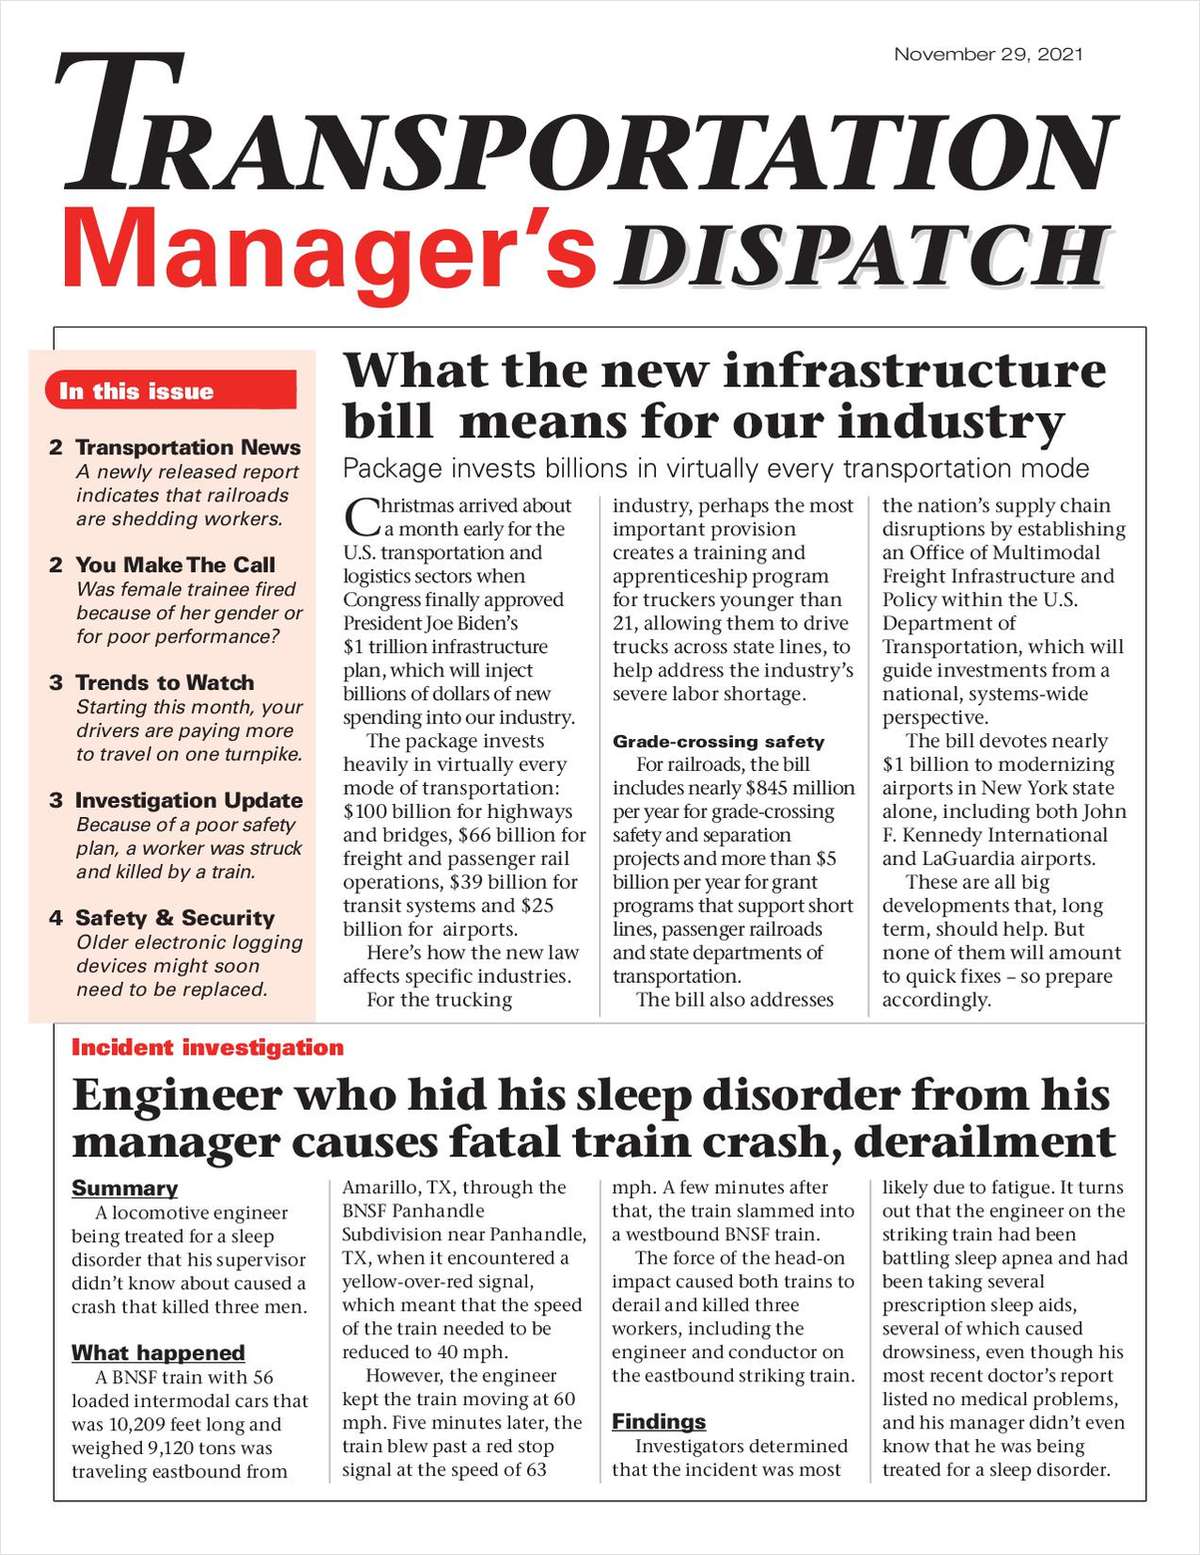 Transportation Manager's Dispatch Newsletter: November 29 Edition